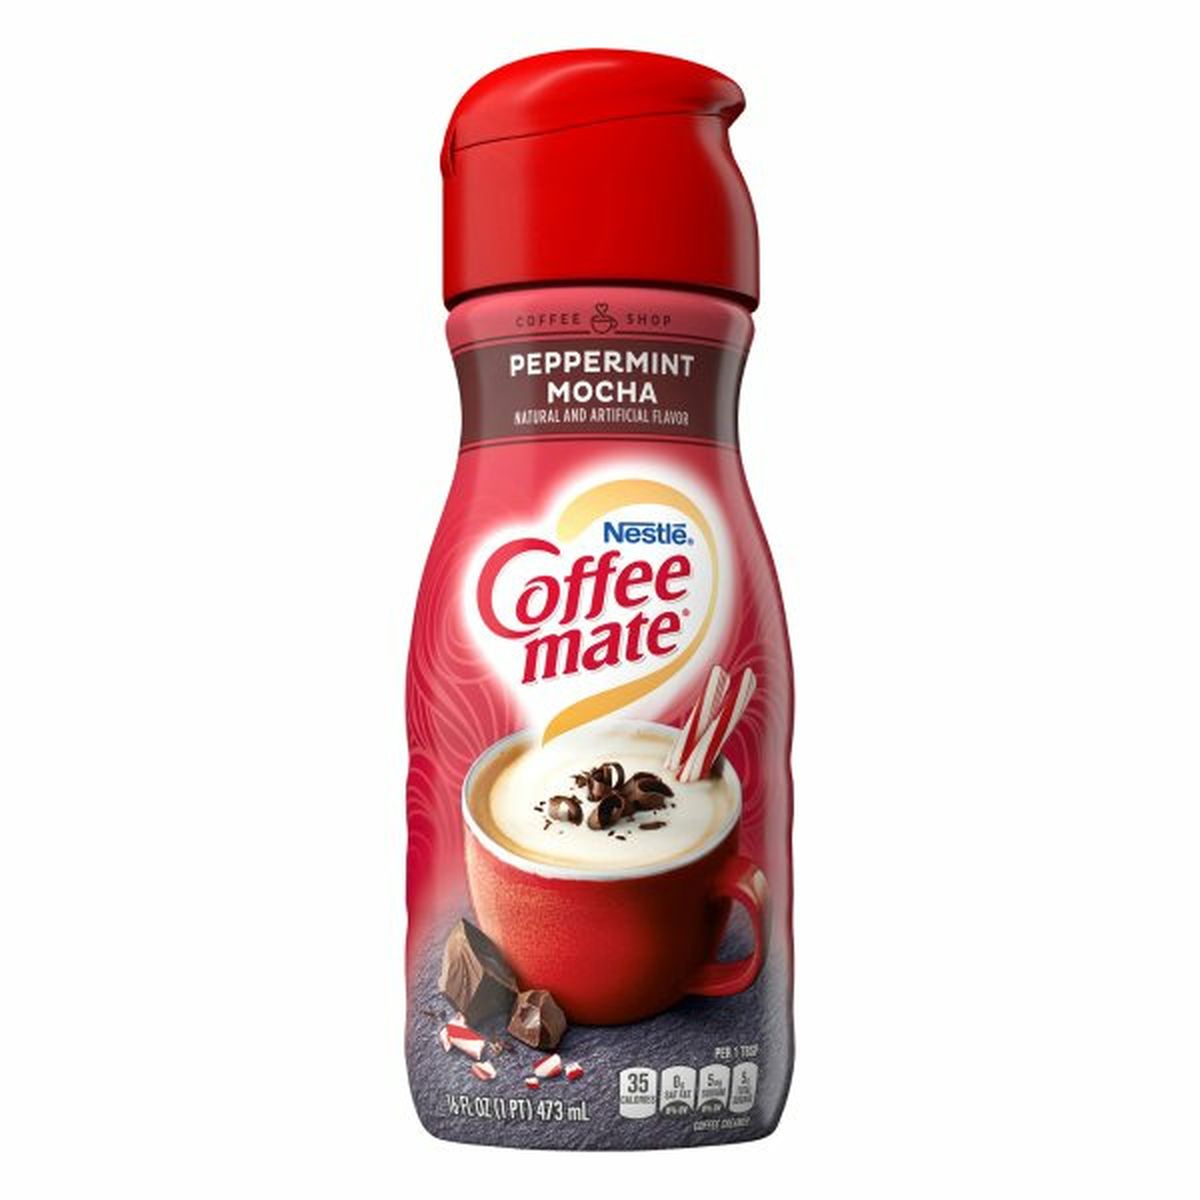 Calories in Coffee mate Coffee Creamer, Peppermint Mocha